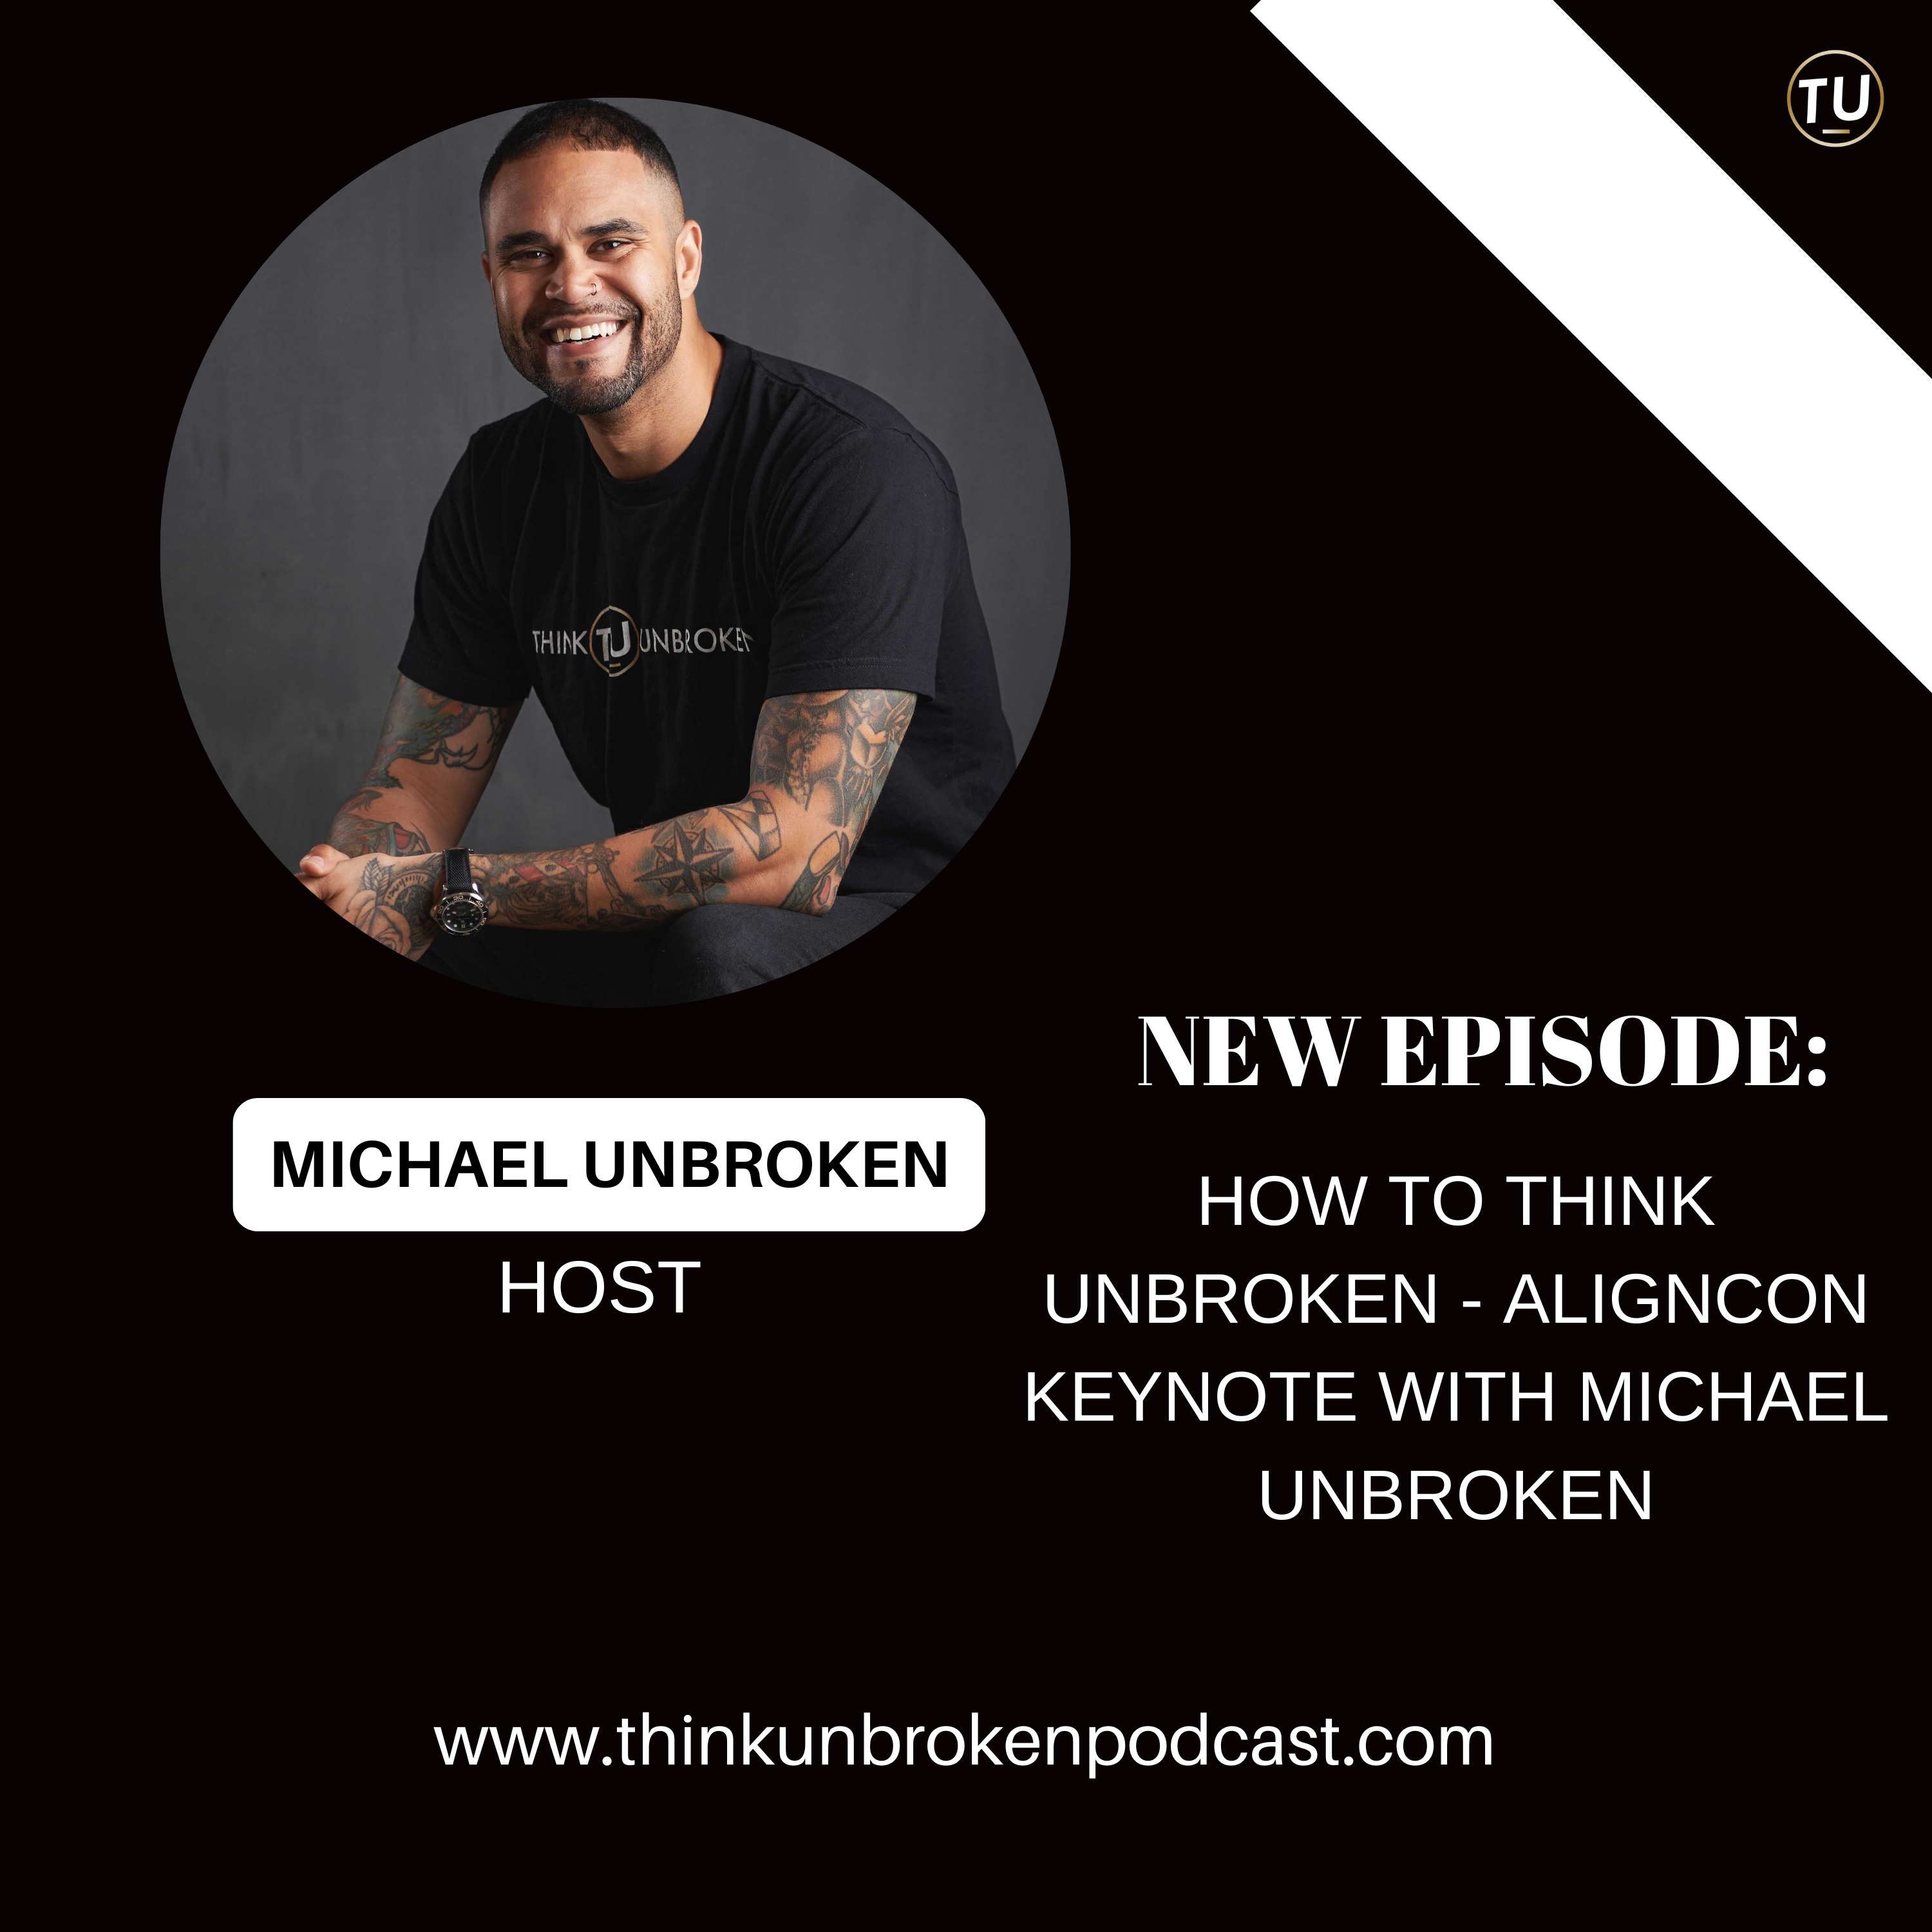 How to Think Unbroken  - AlignCon keynote with Michael Unbroken